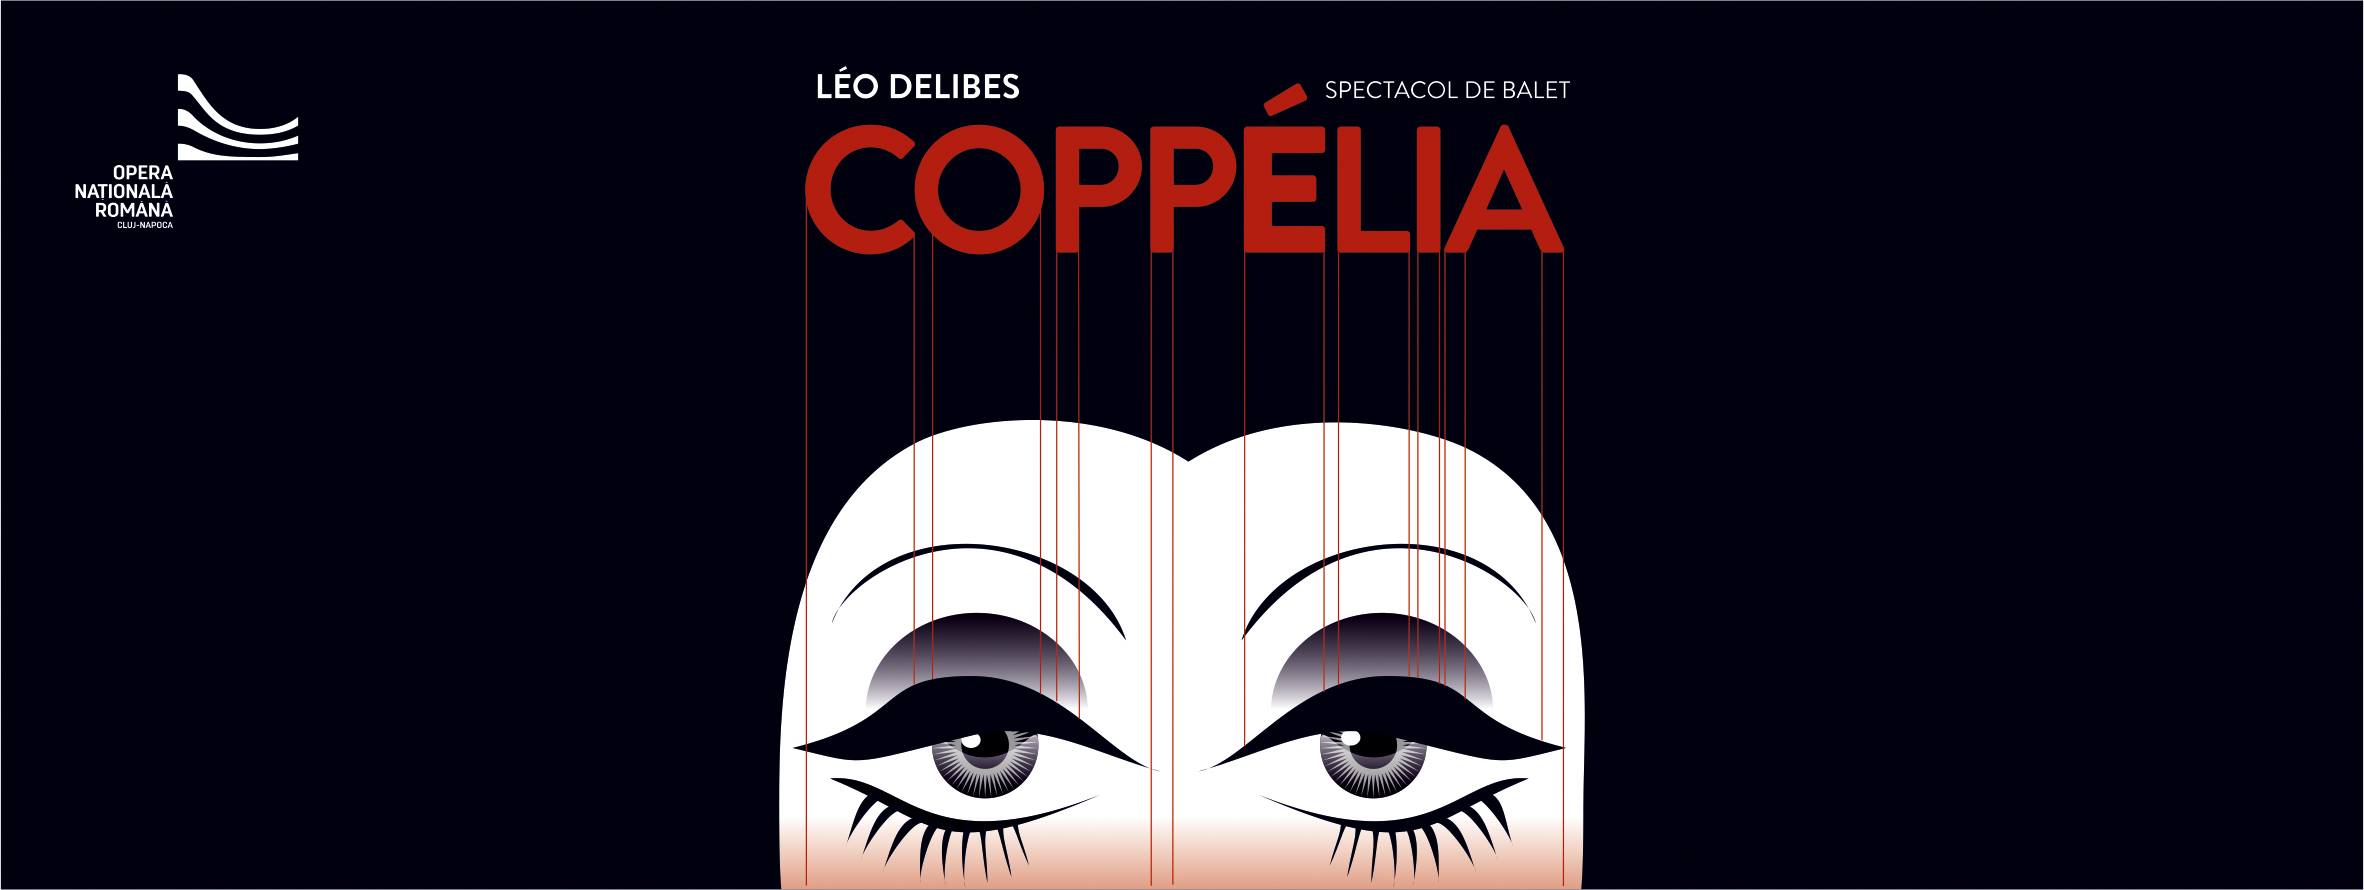 Coppélia - Léo Delibes